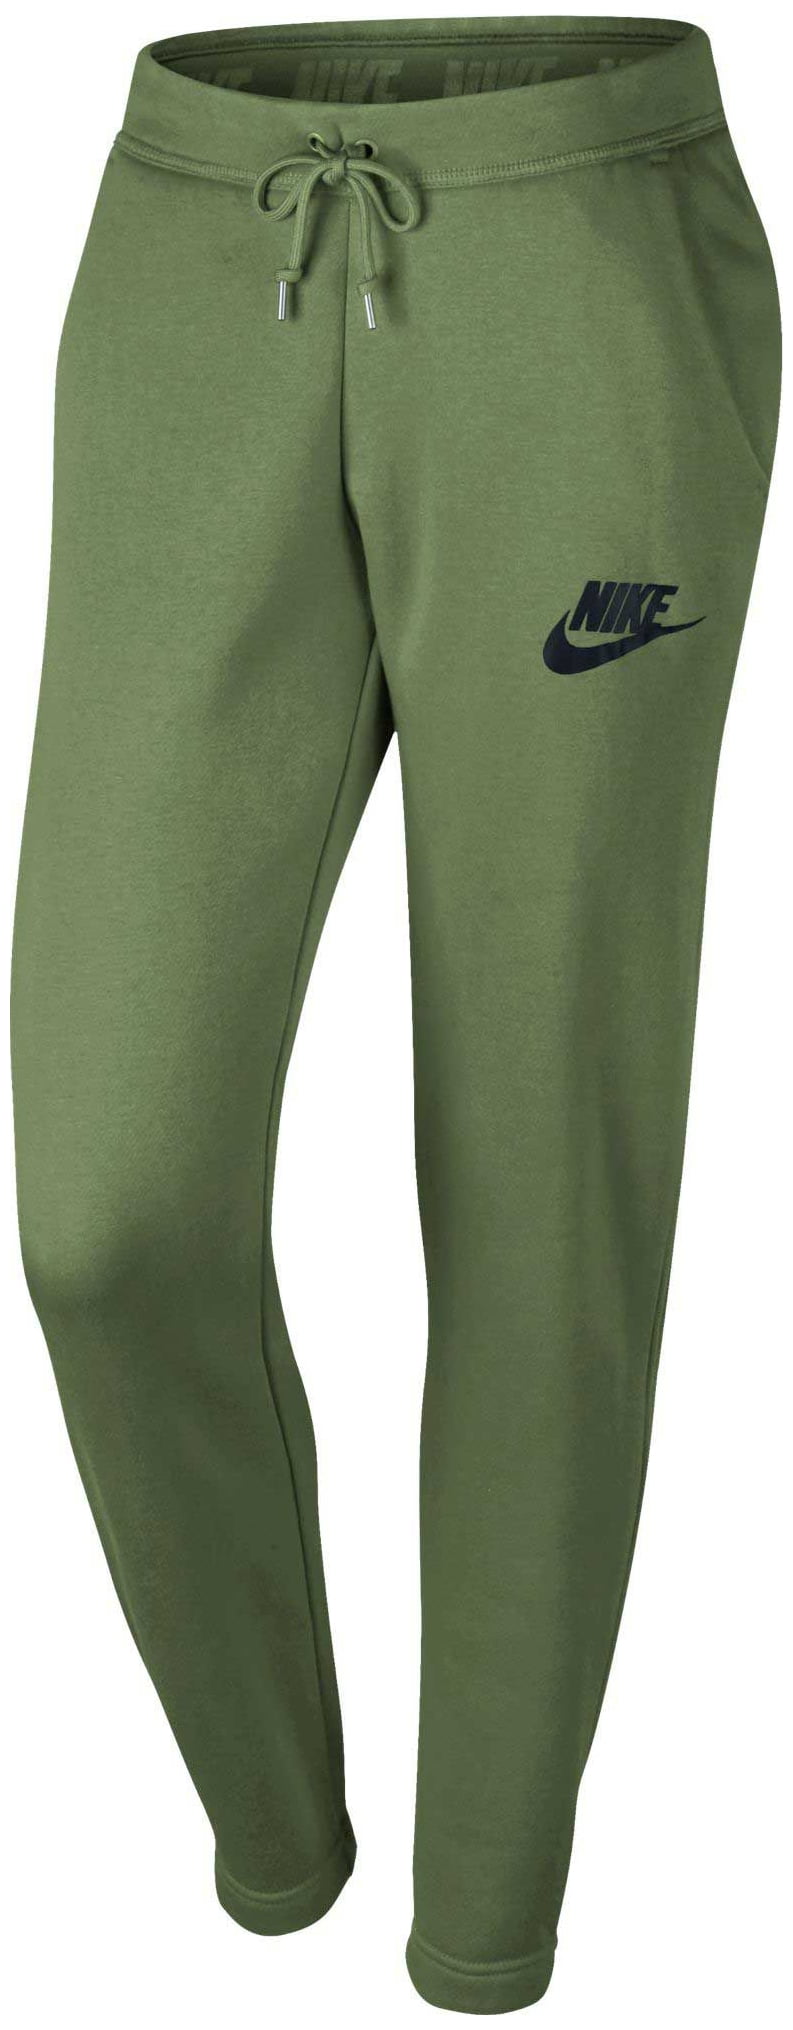 nike green jogger pants